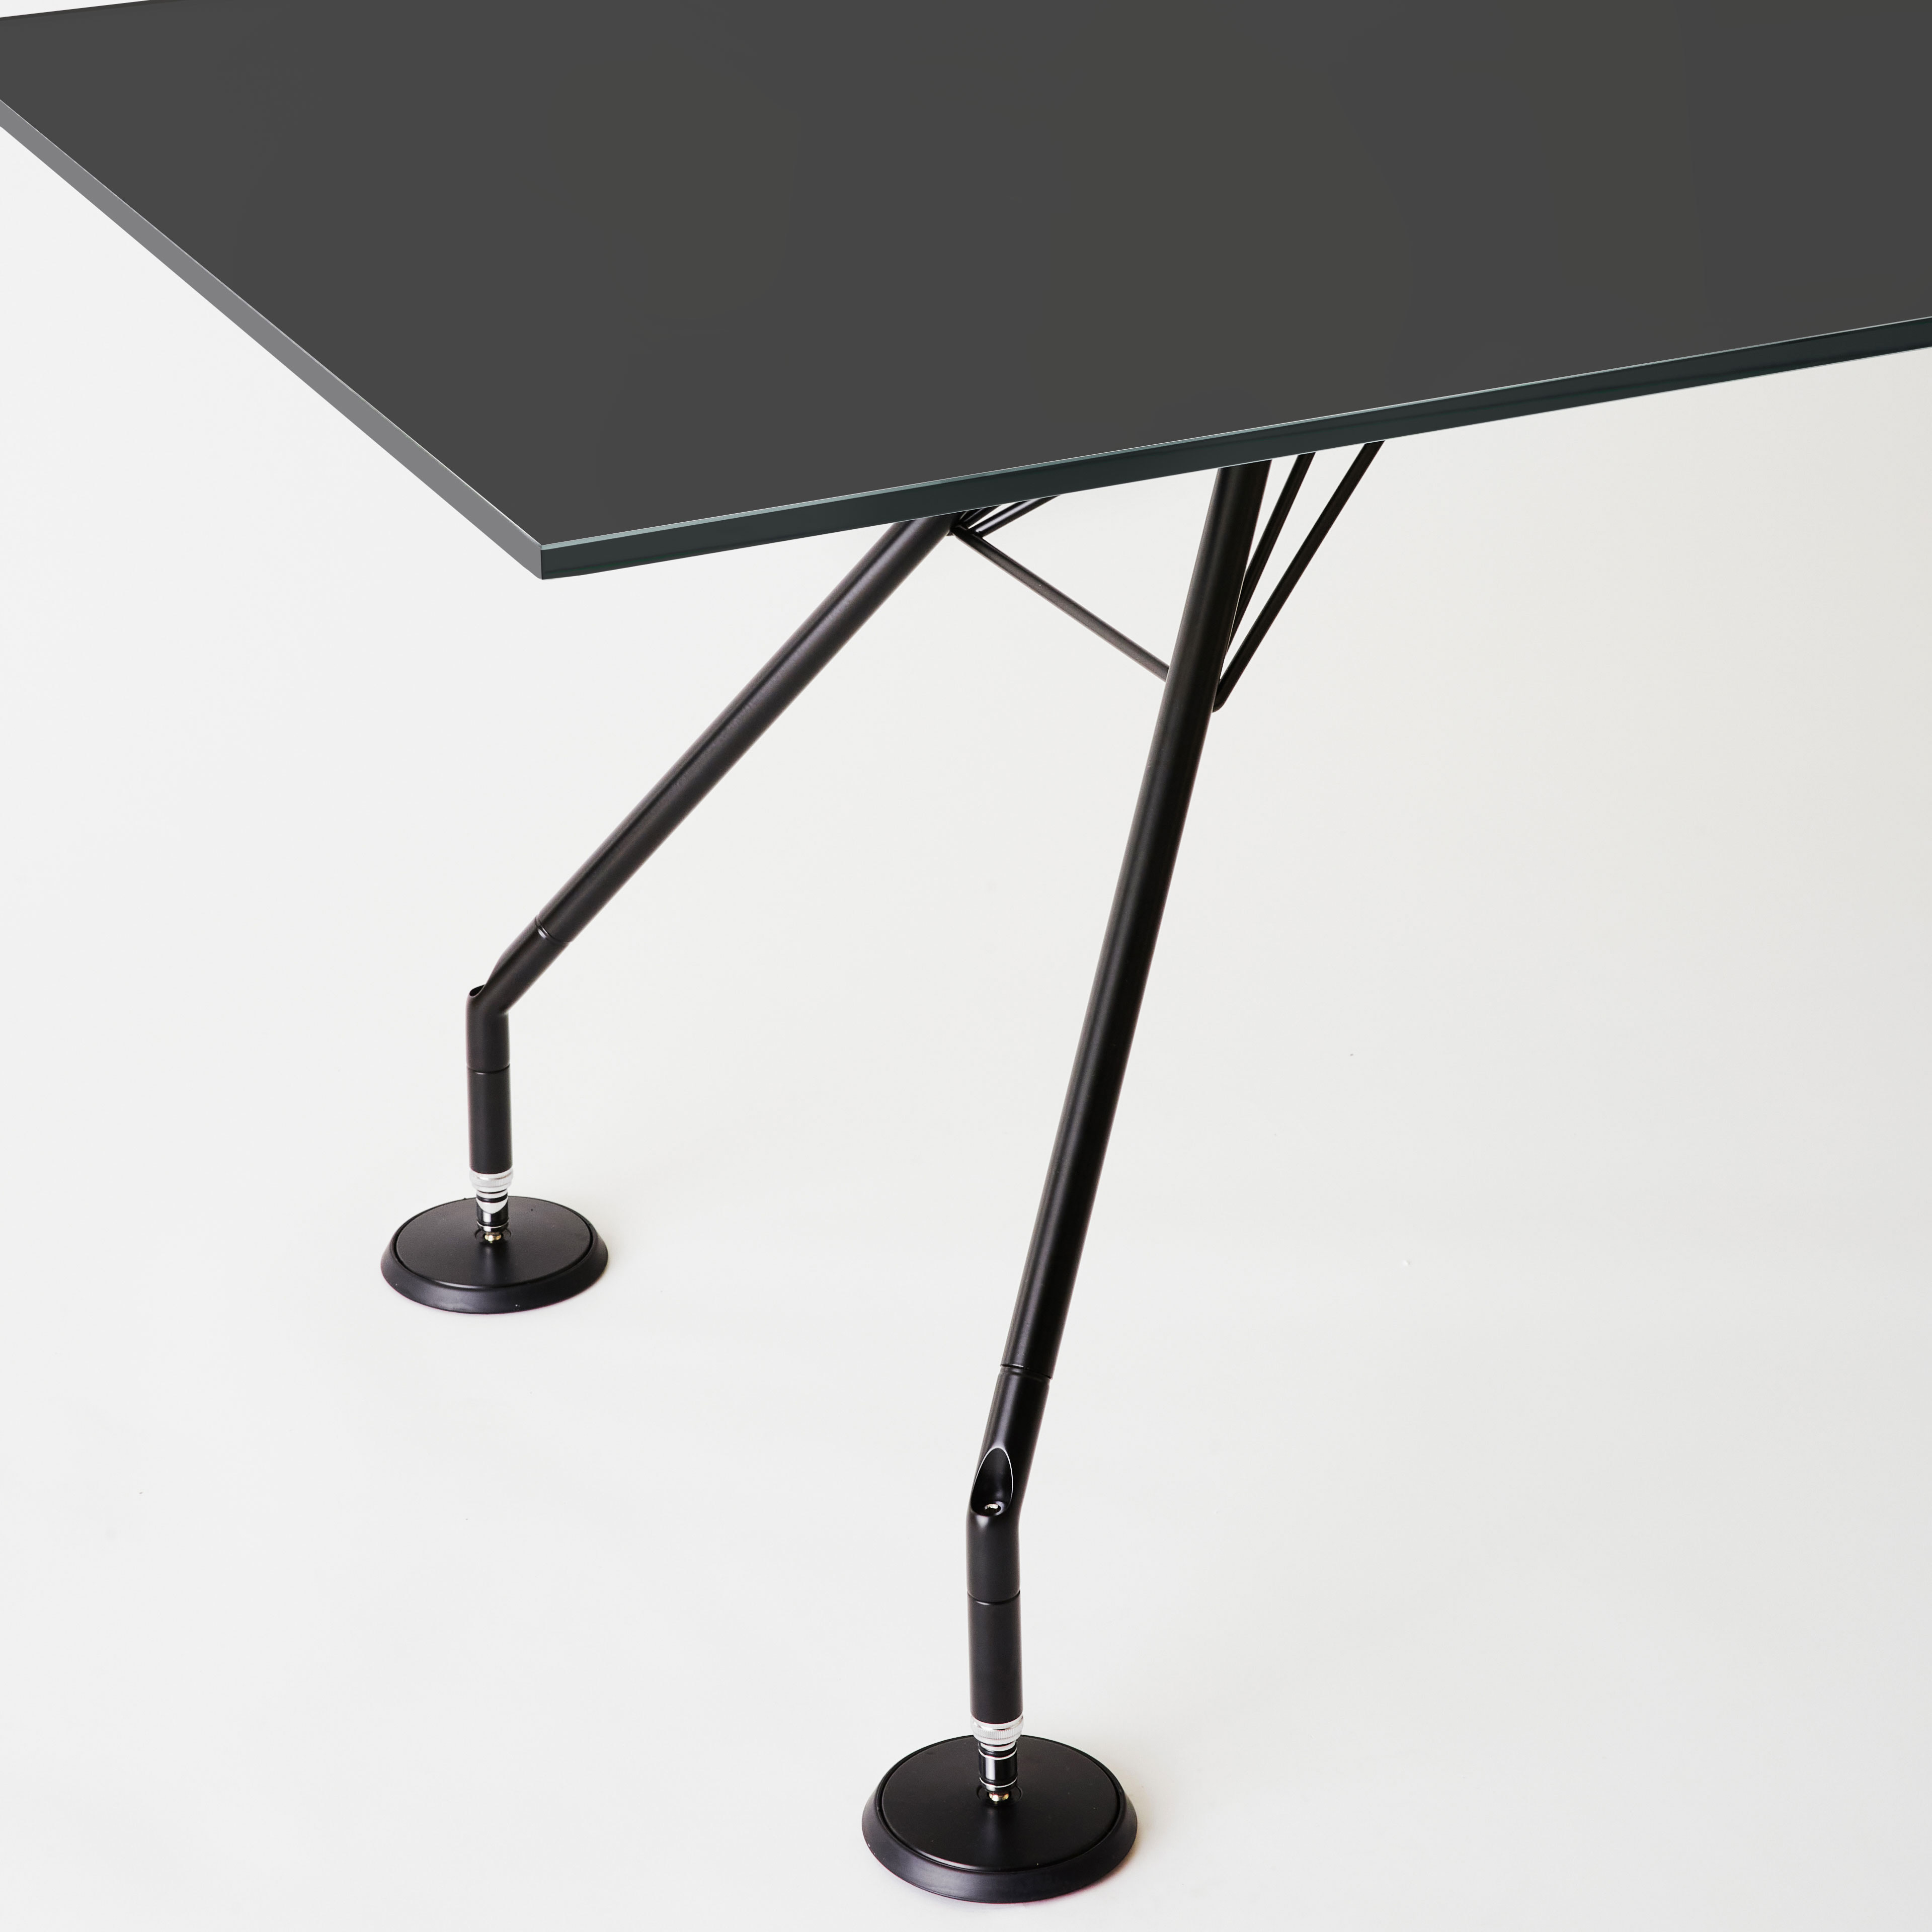 Nomos Table (1600 size / laminate top / black) (50% 할인 프로모션) 강화유리 컨퍼런스 사장 대표 중역 임원 사무용 책상 데스크